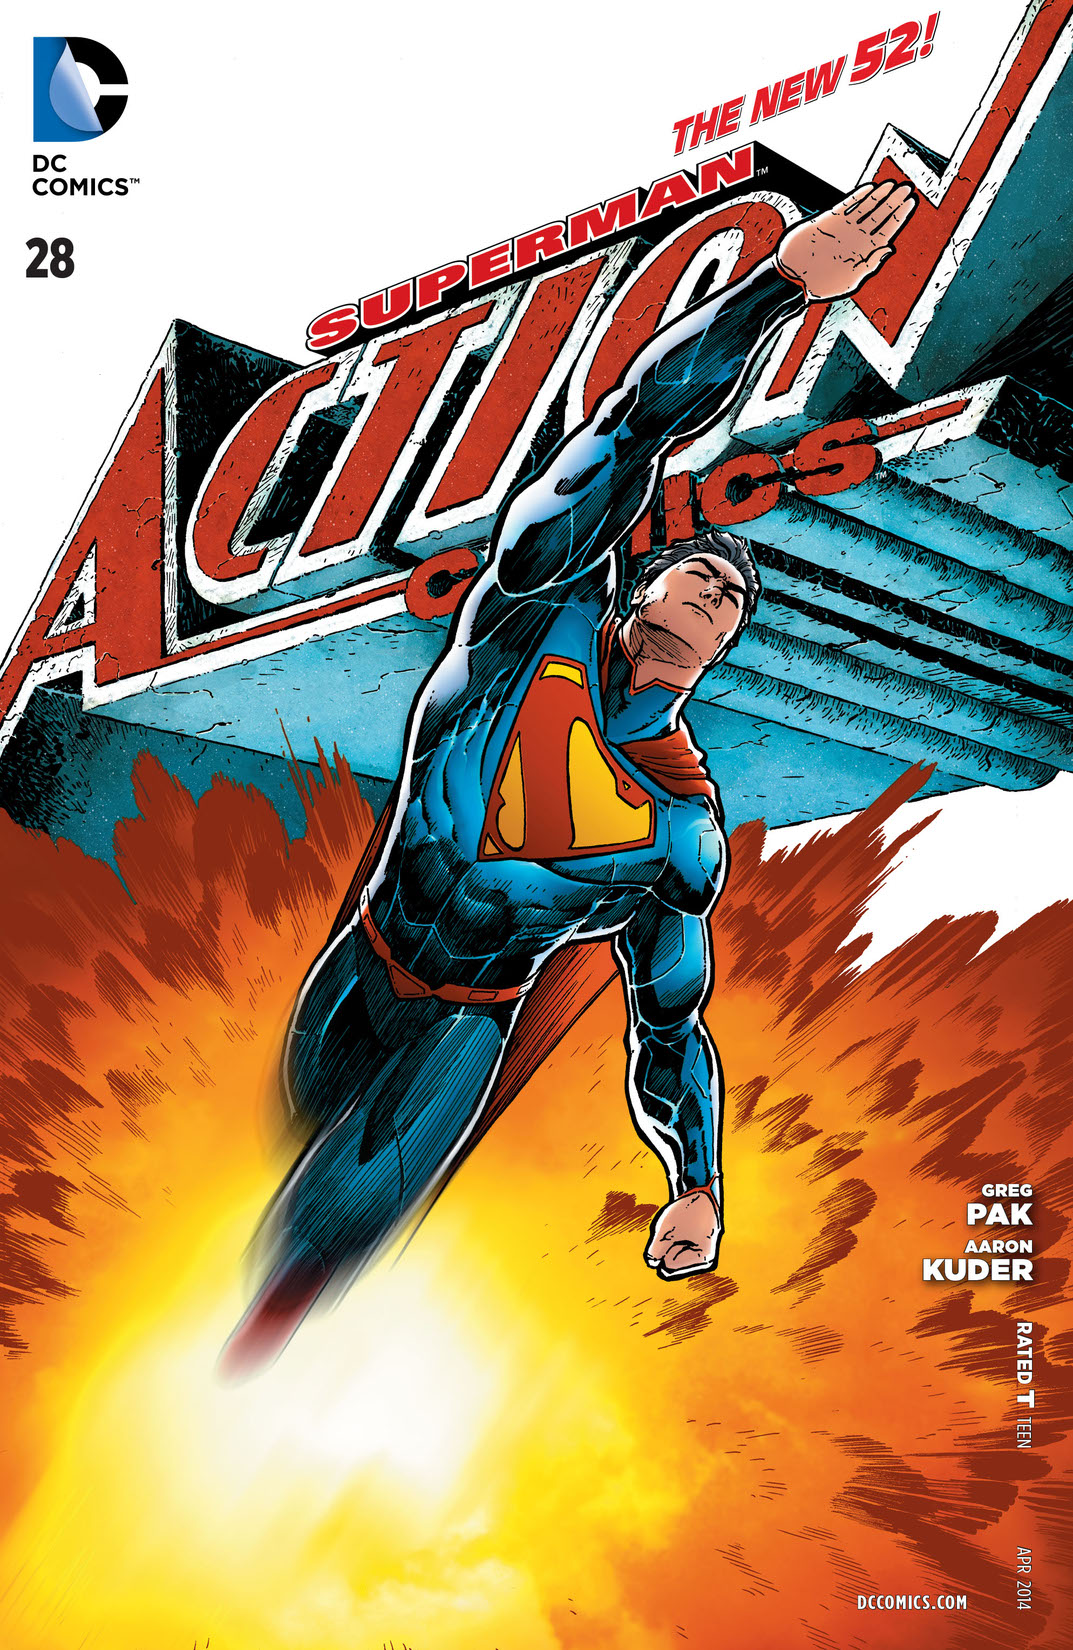 Action Comics (2011-) #28 preview images